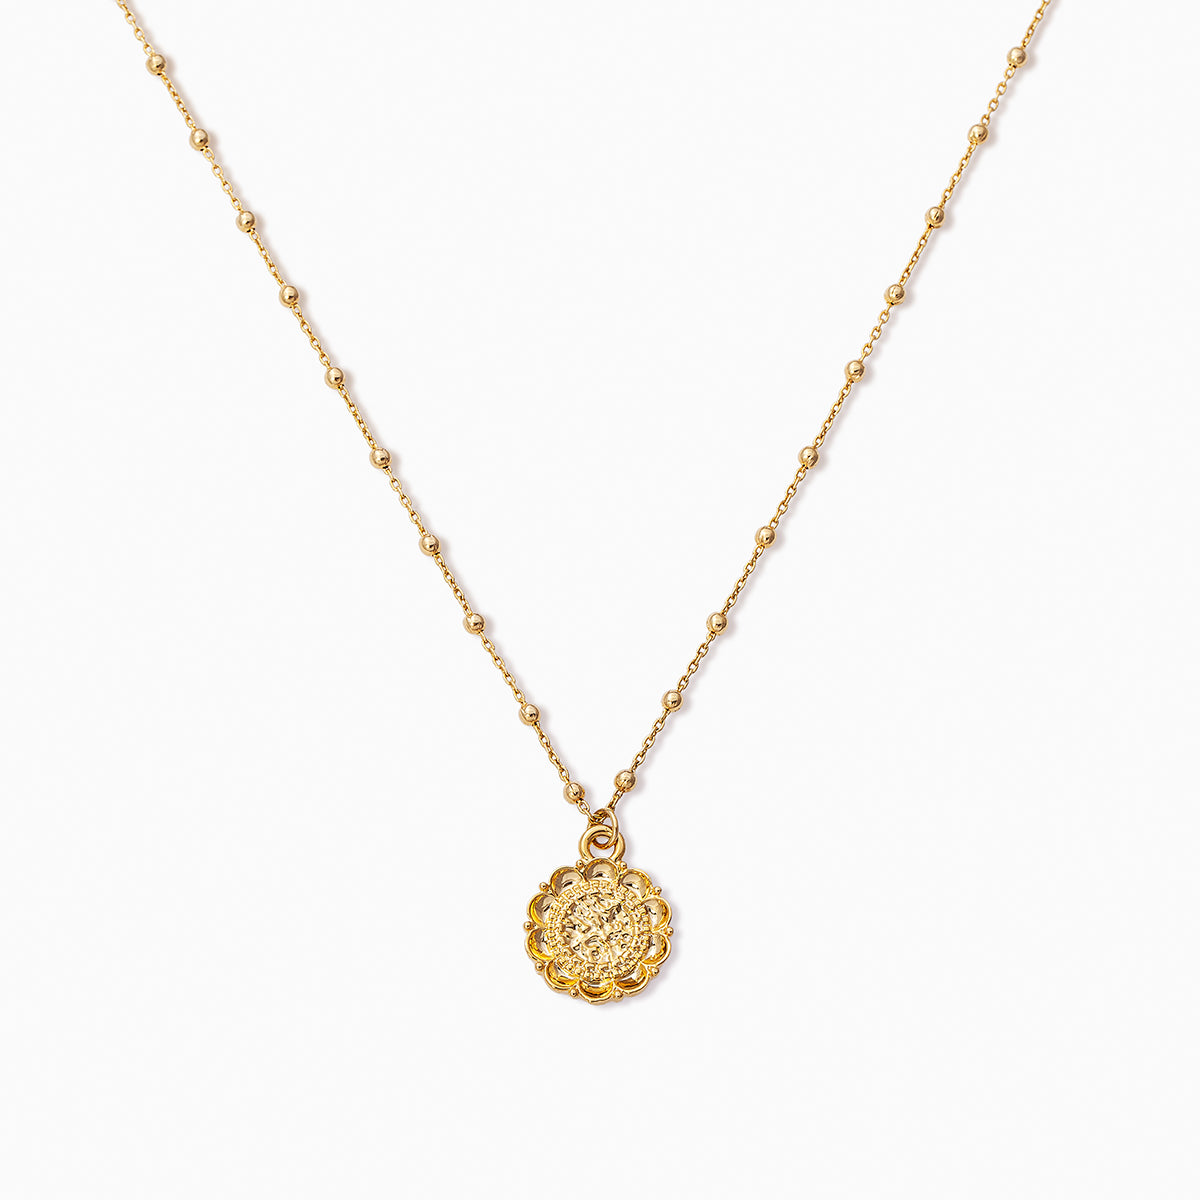 Atocha Necklace | Gold | Product Image | Uncommon James